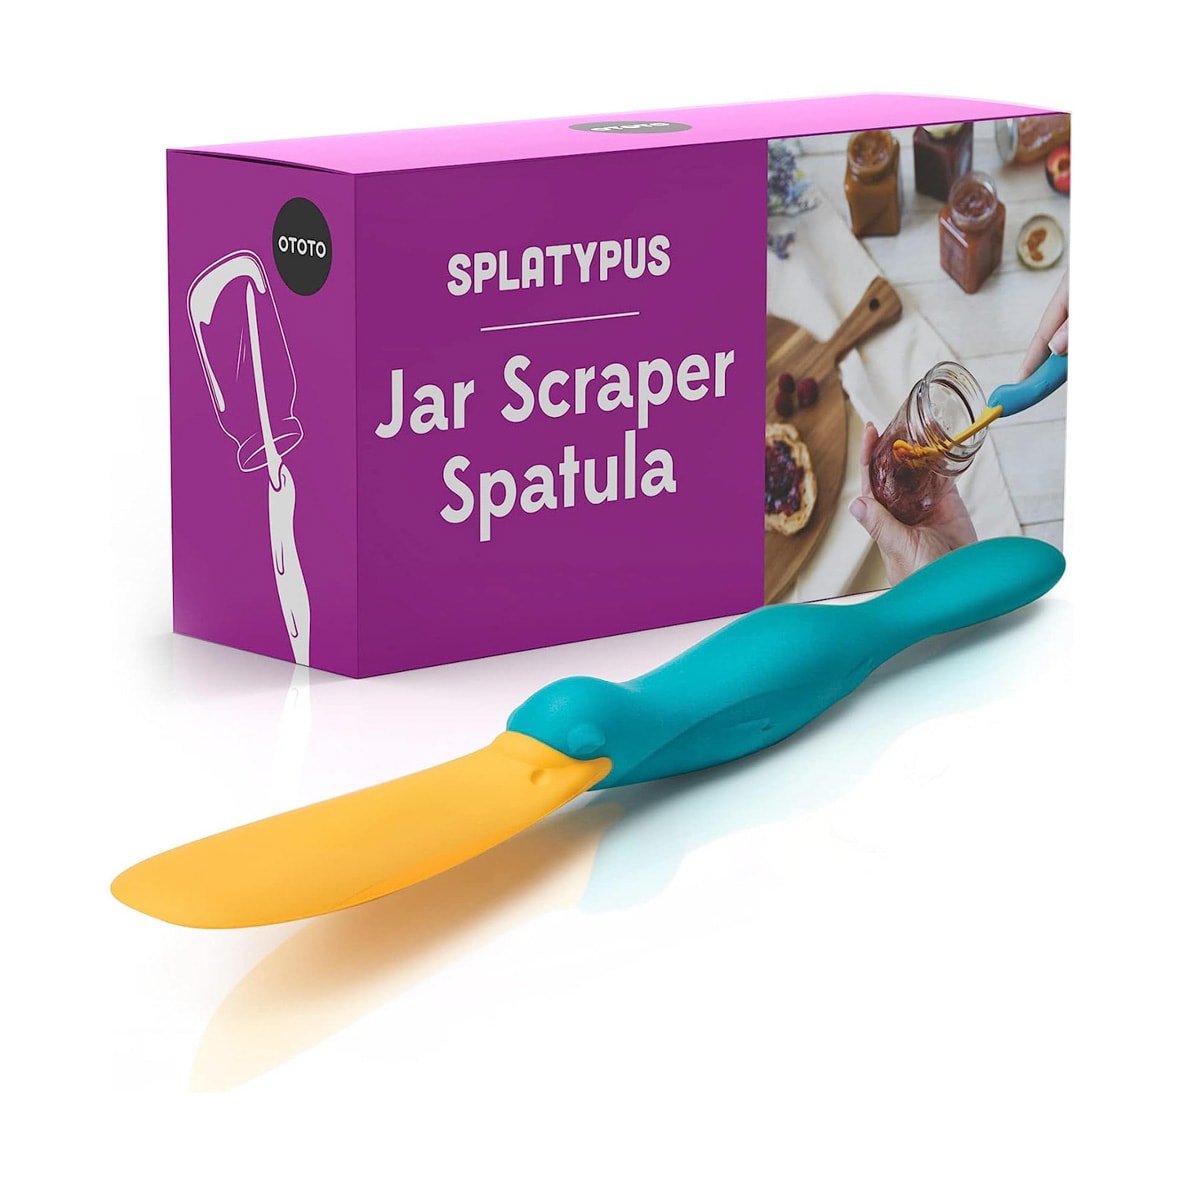 Splatypus jar spatula next to the box.